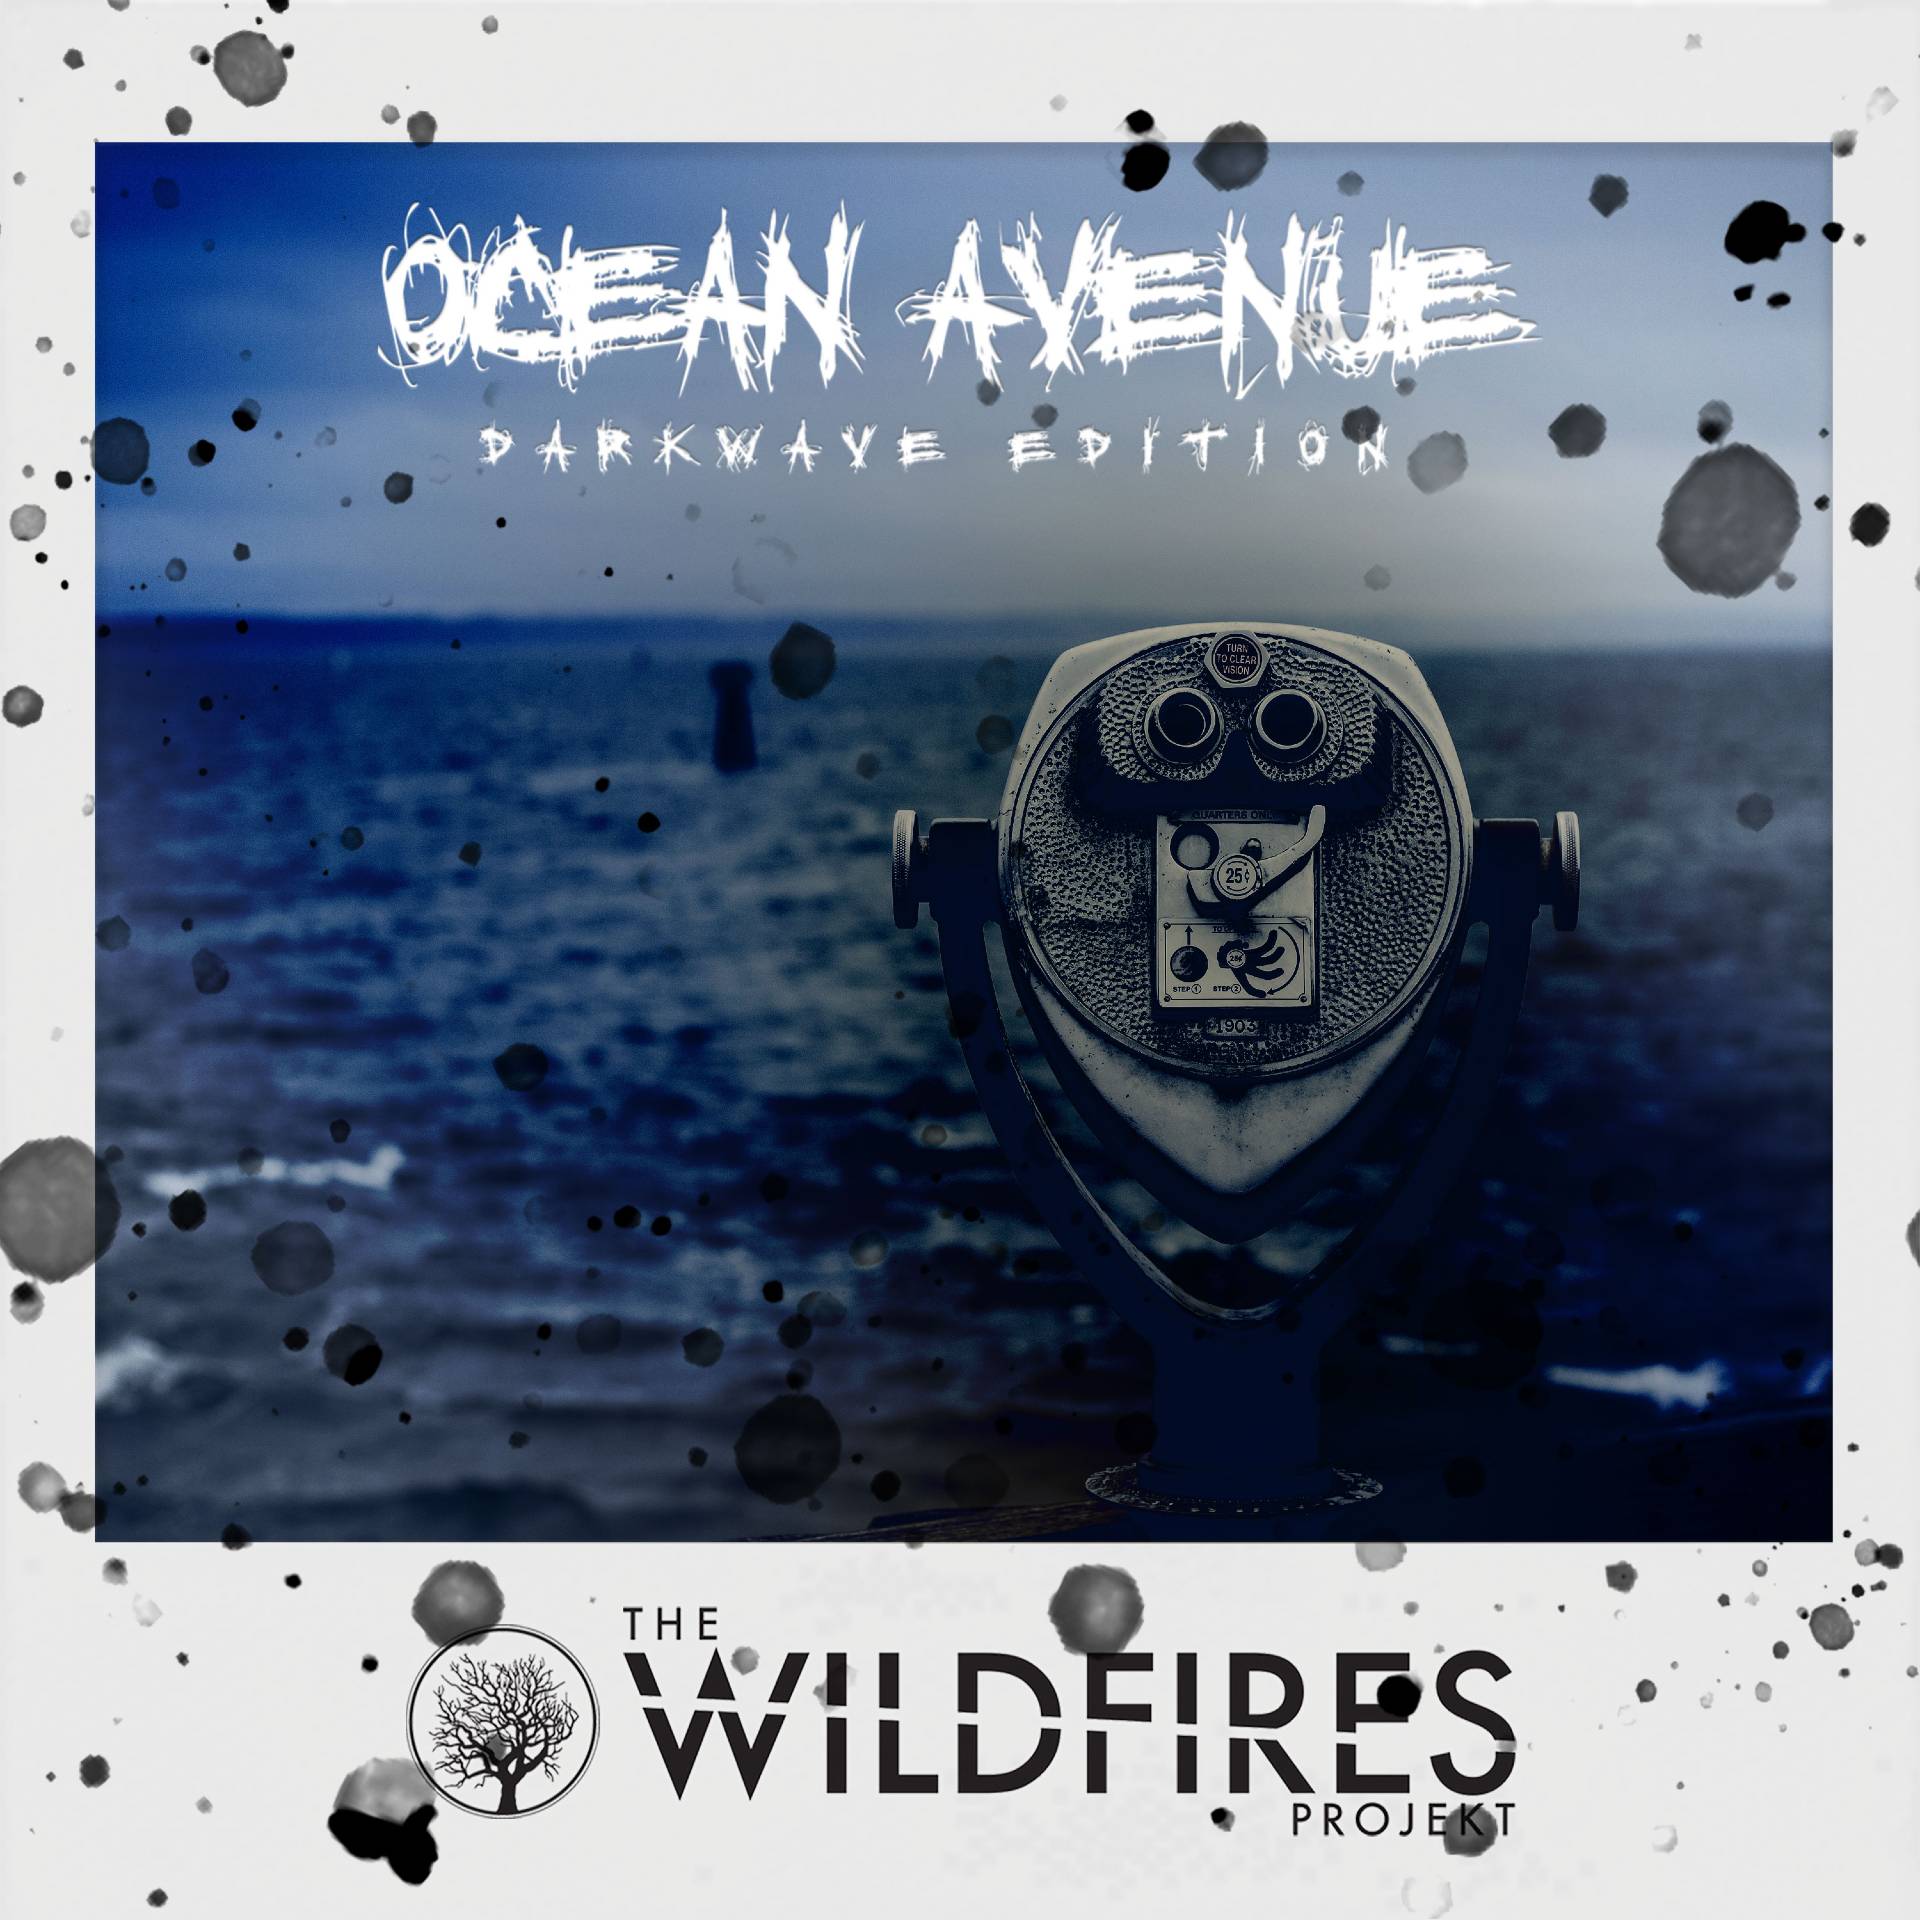 The Wildfires Projekt “Ocean Avenue” (Darkwave Edition) single artwork